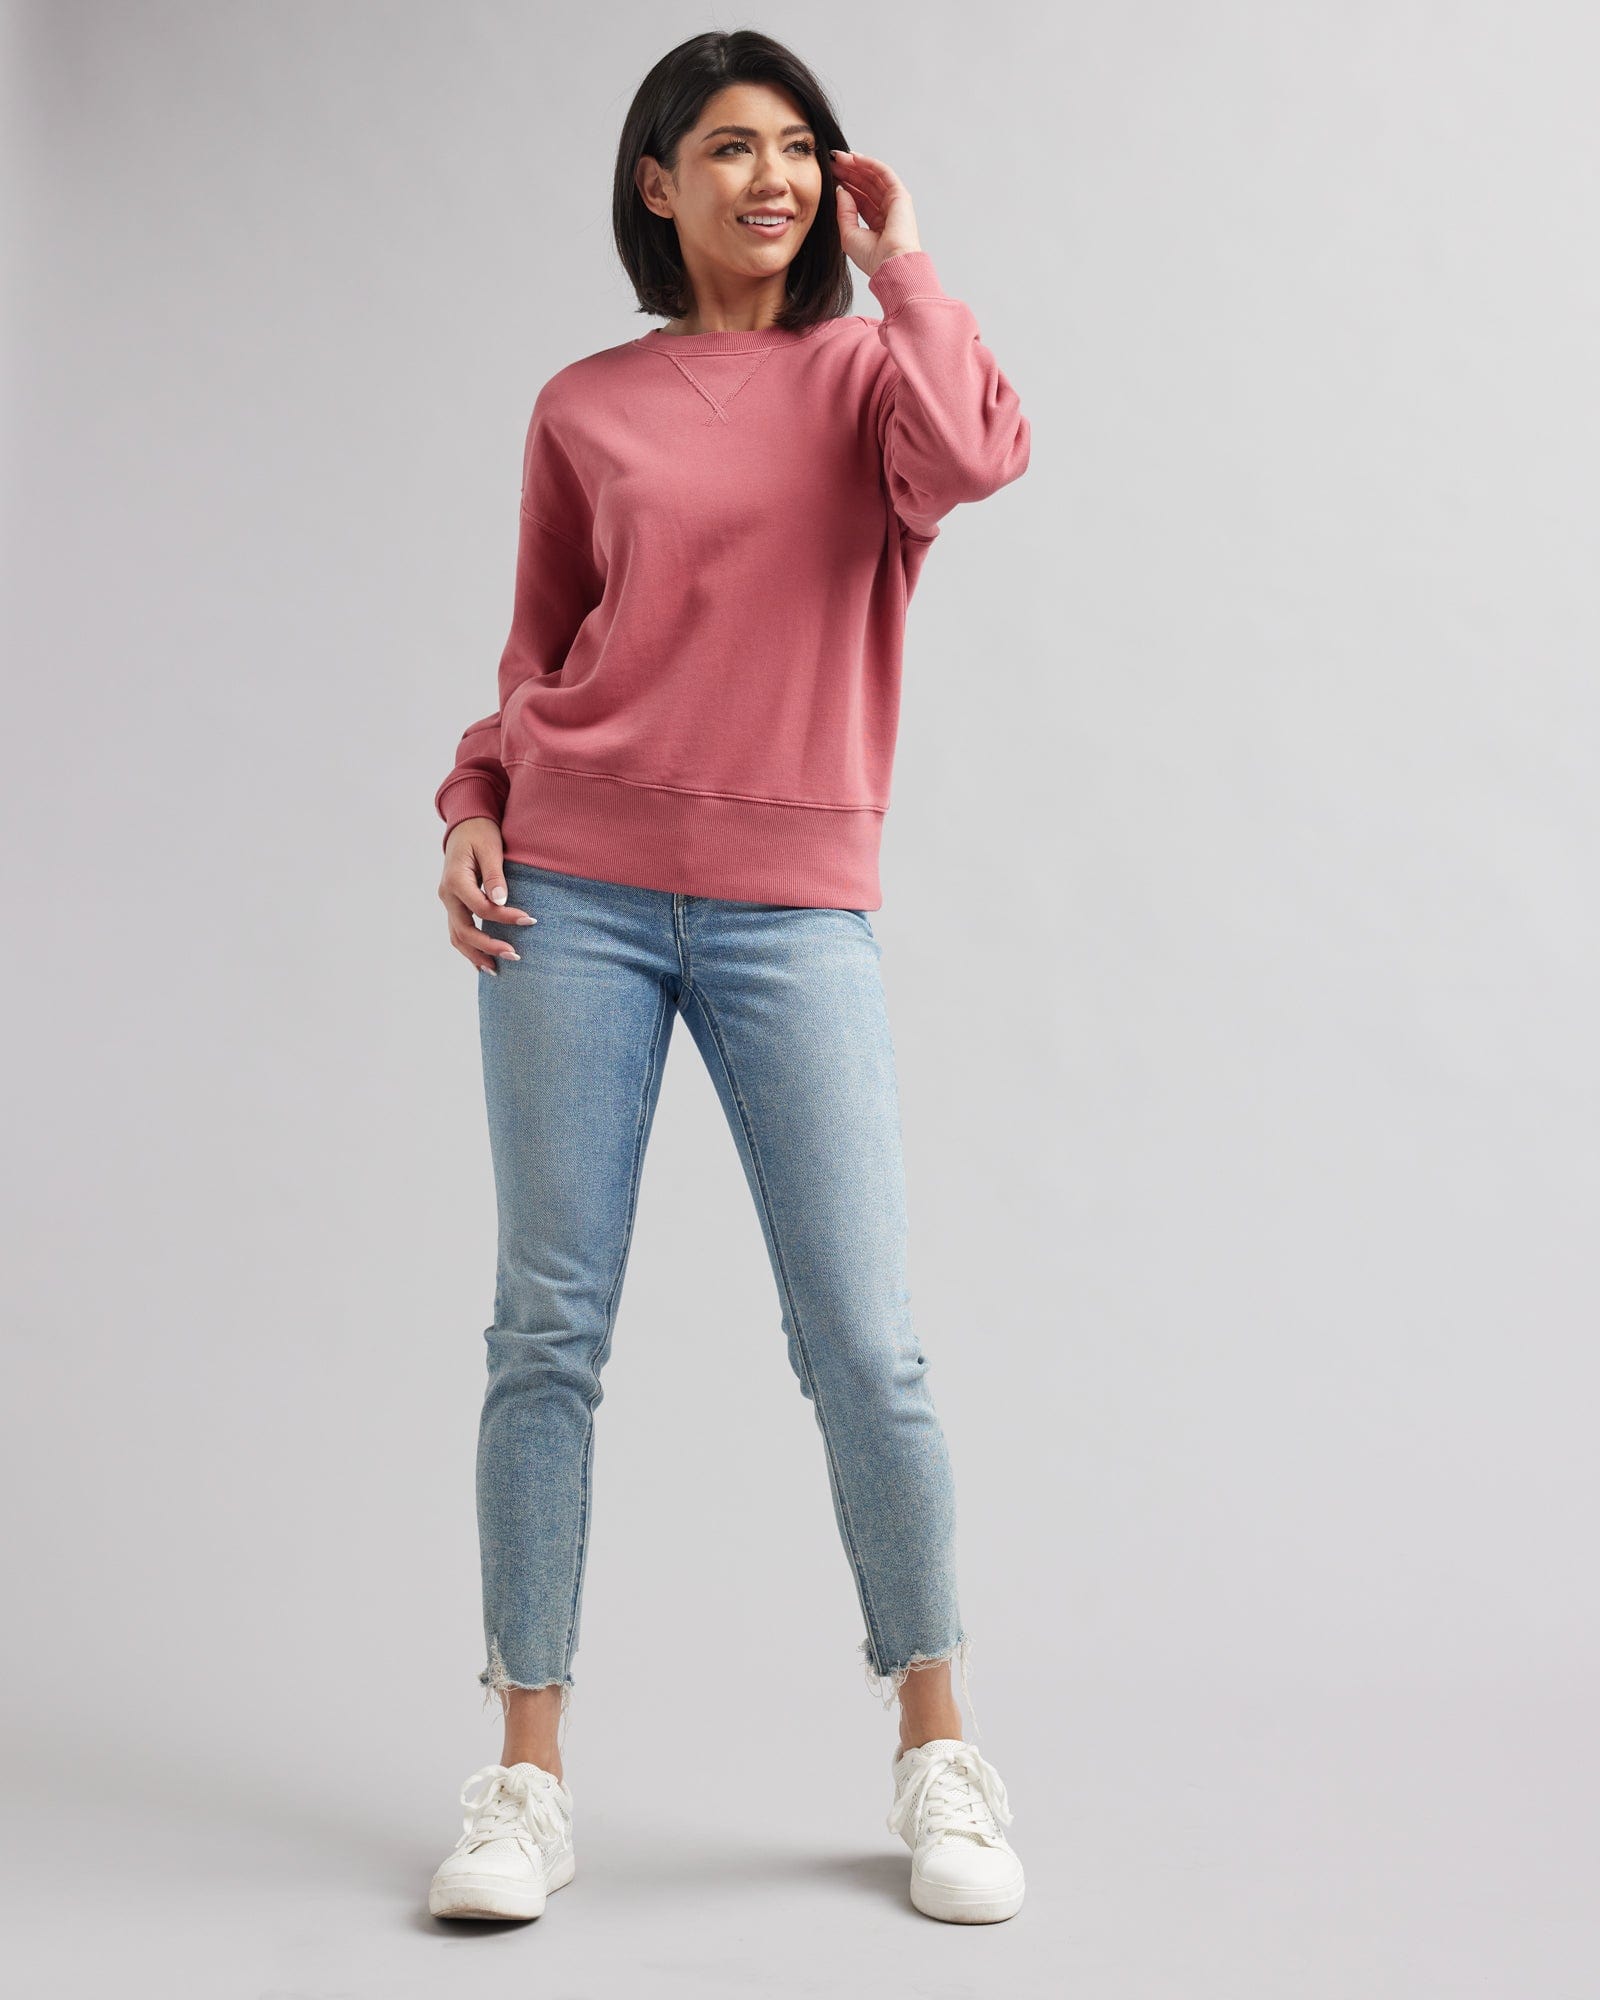 Woman in a pink, long sleeved sweatshirt